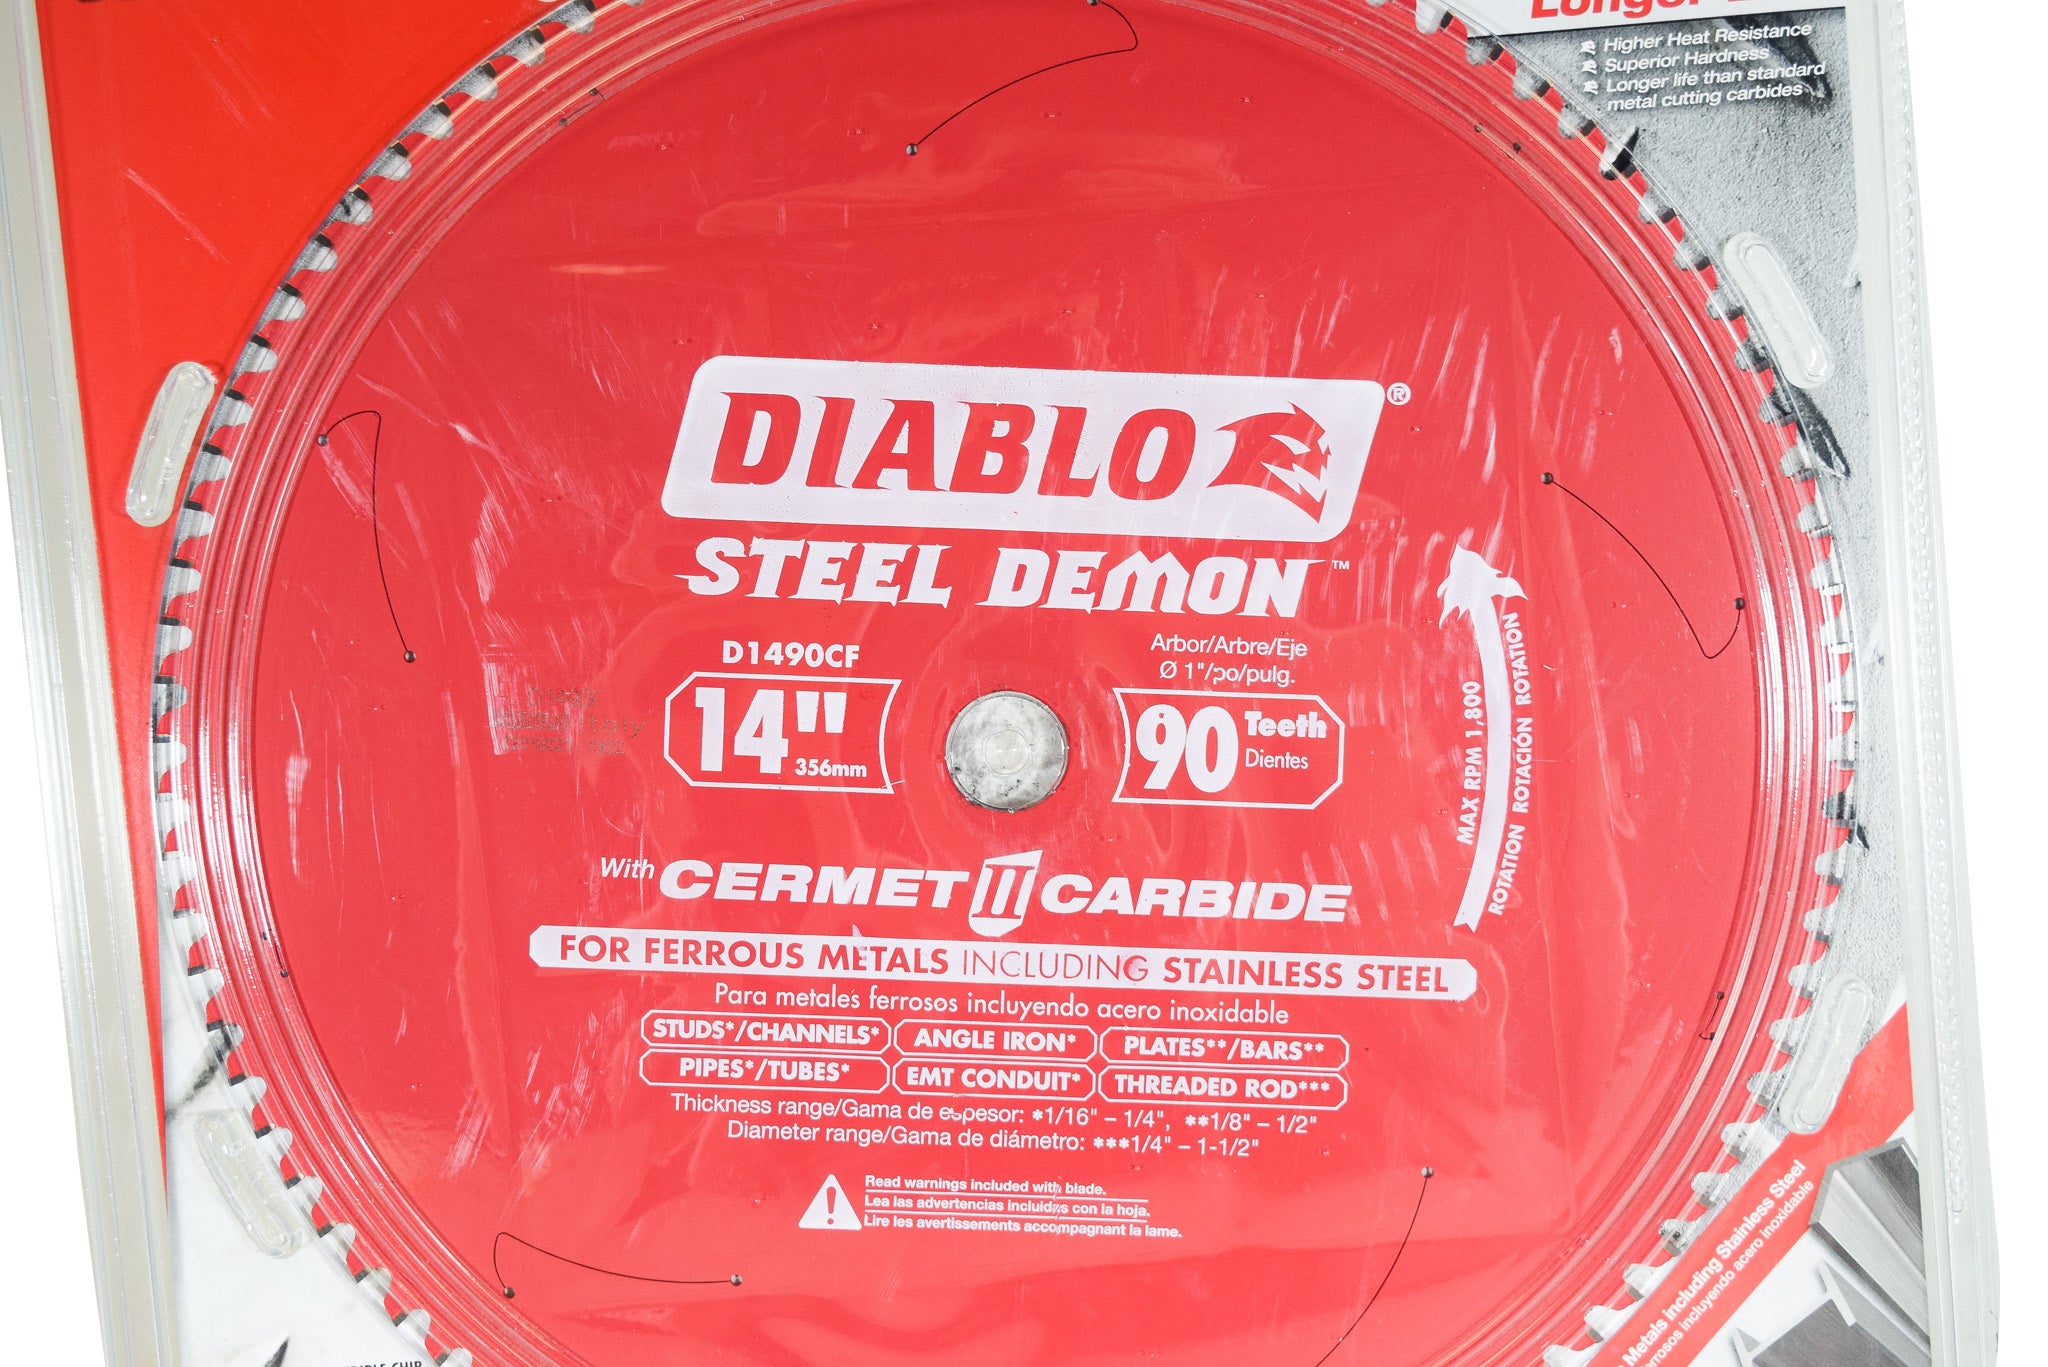 Diablo D1490CF 14 in. x 90 Tooth Steel Demon Cermet II Saw Blade for Metals and Stainless Steel